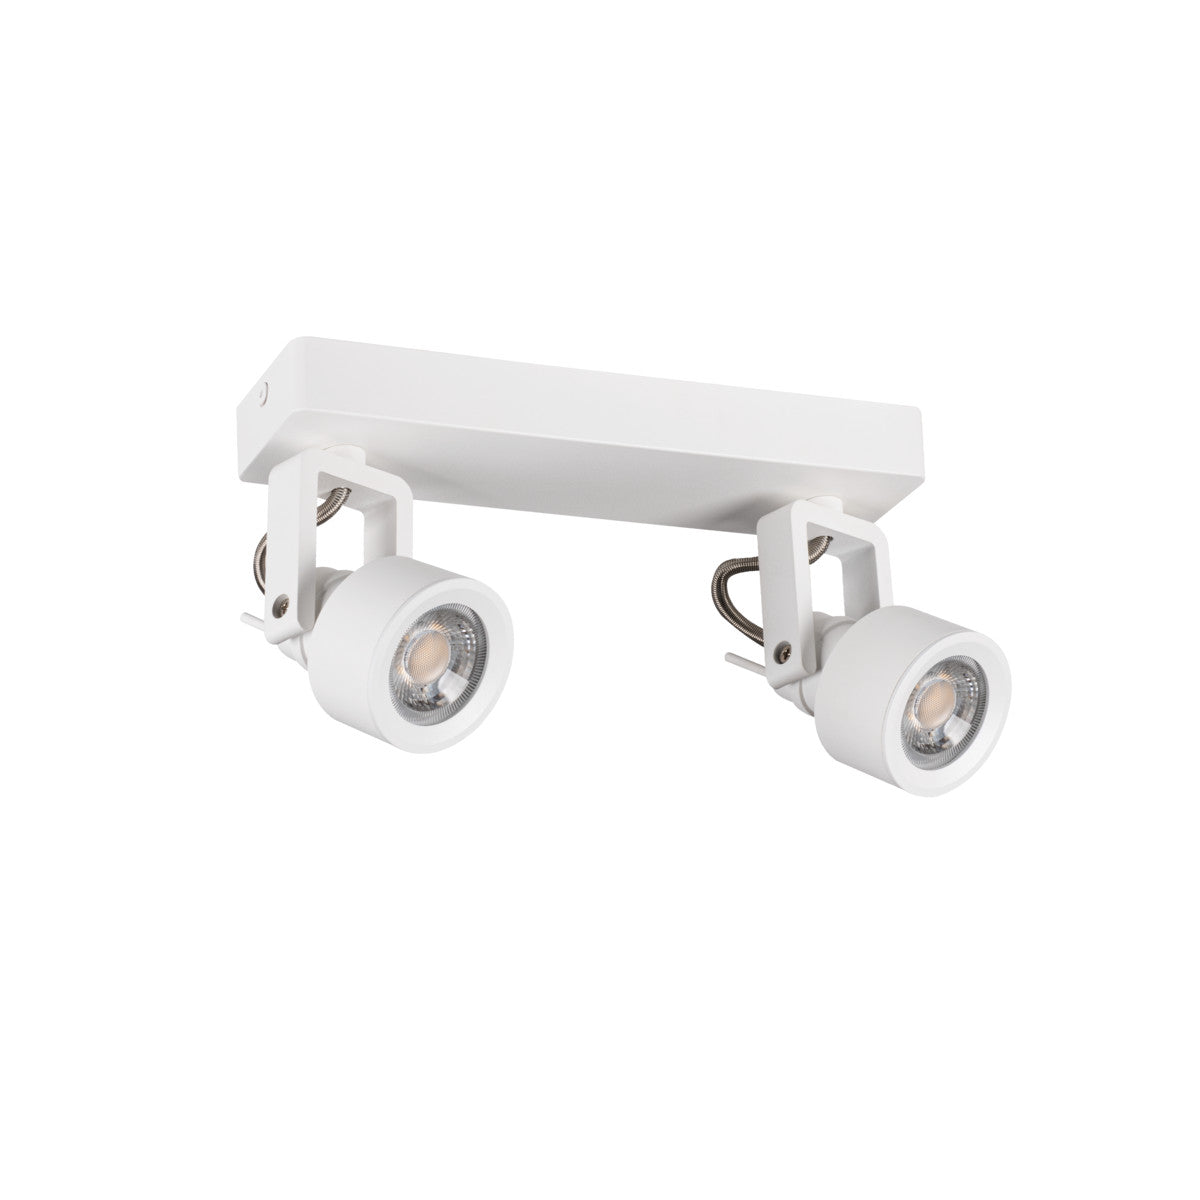 Kanlux SONDA GU10 Wall Ceiling Decorative Spot Light Adjustable Rotatable Fitting